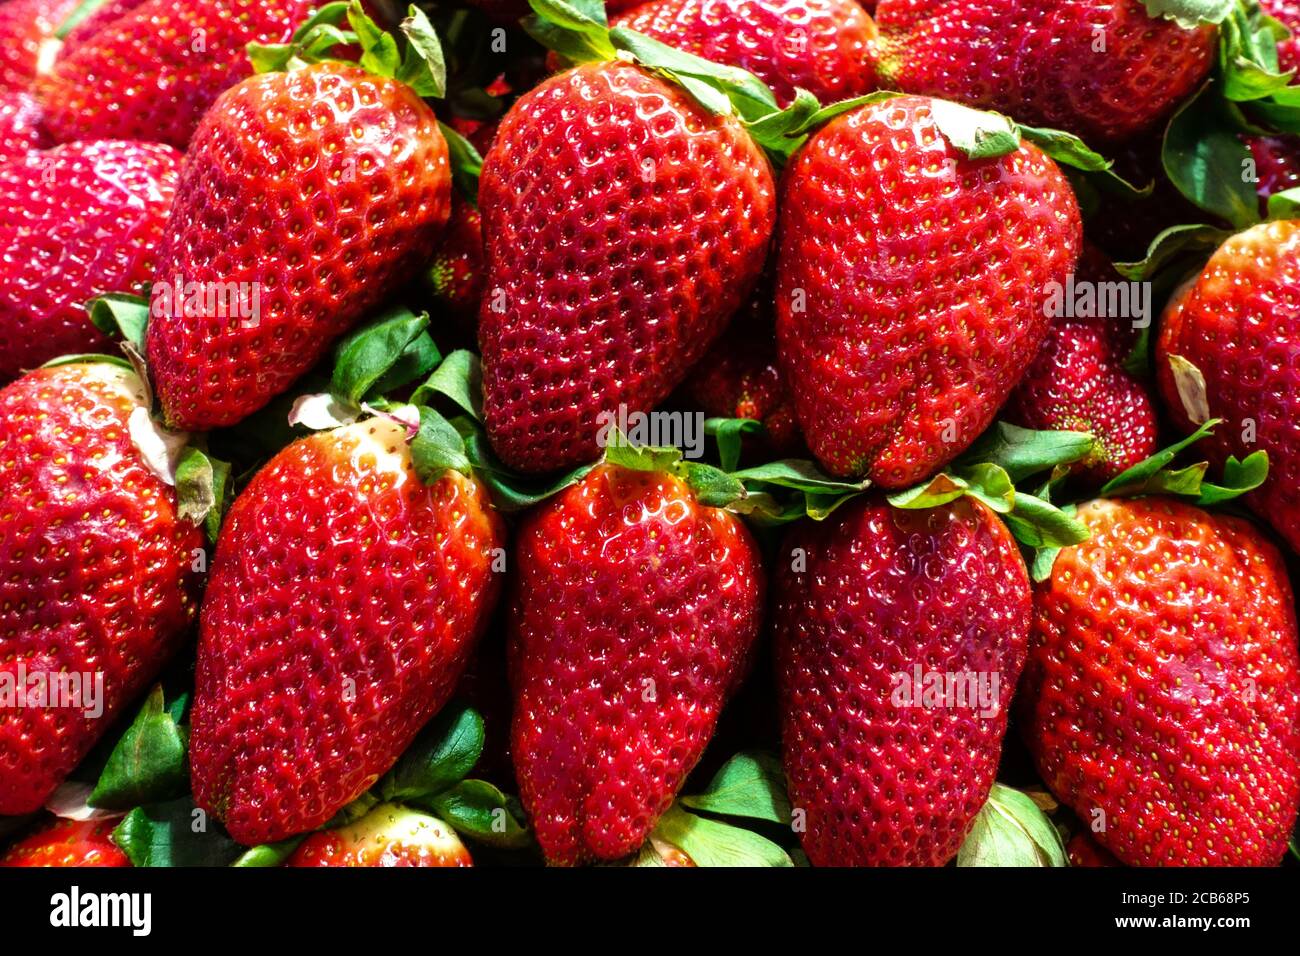 Strawberry display Stock Photo